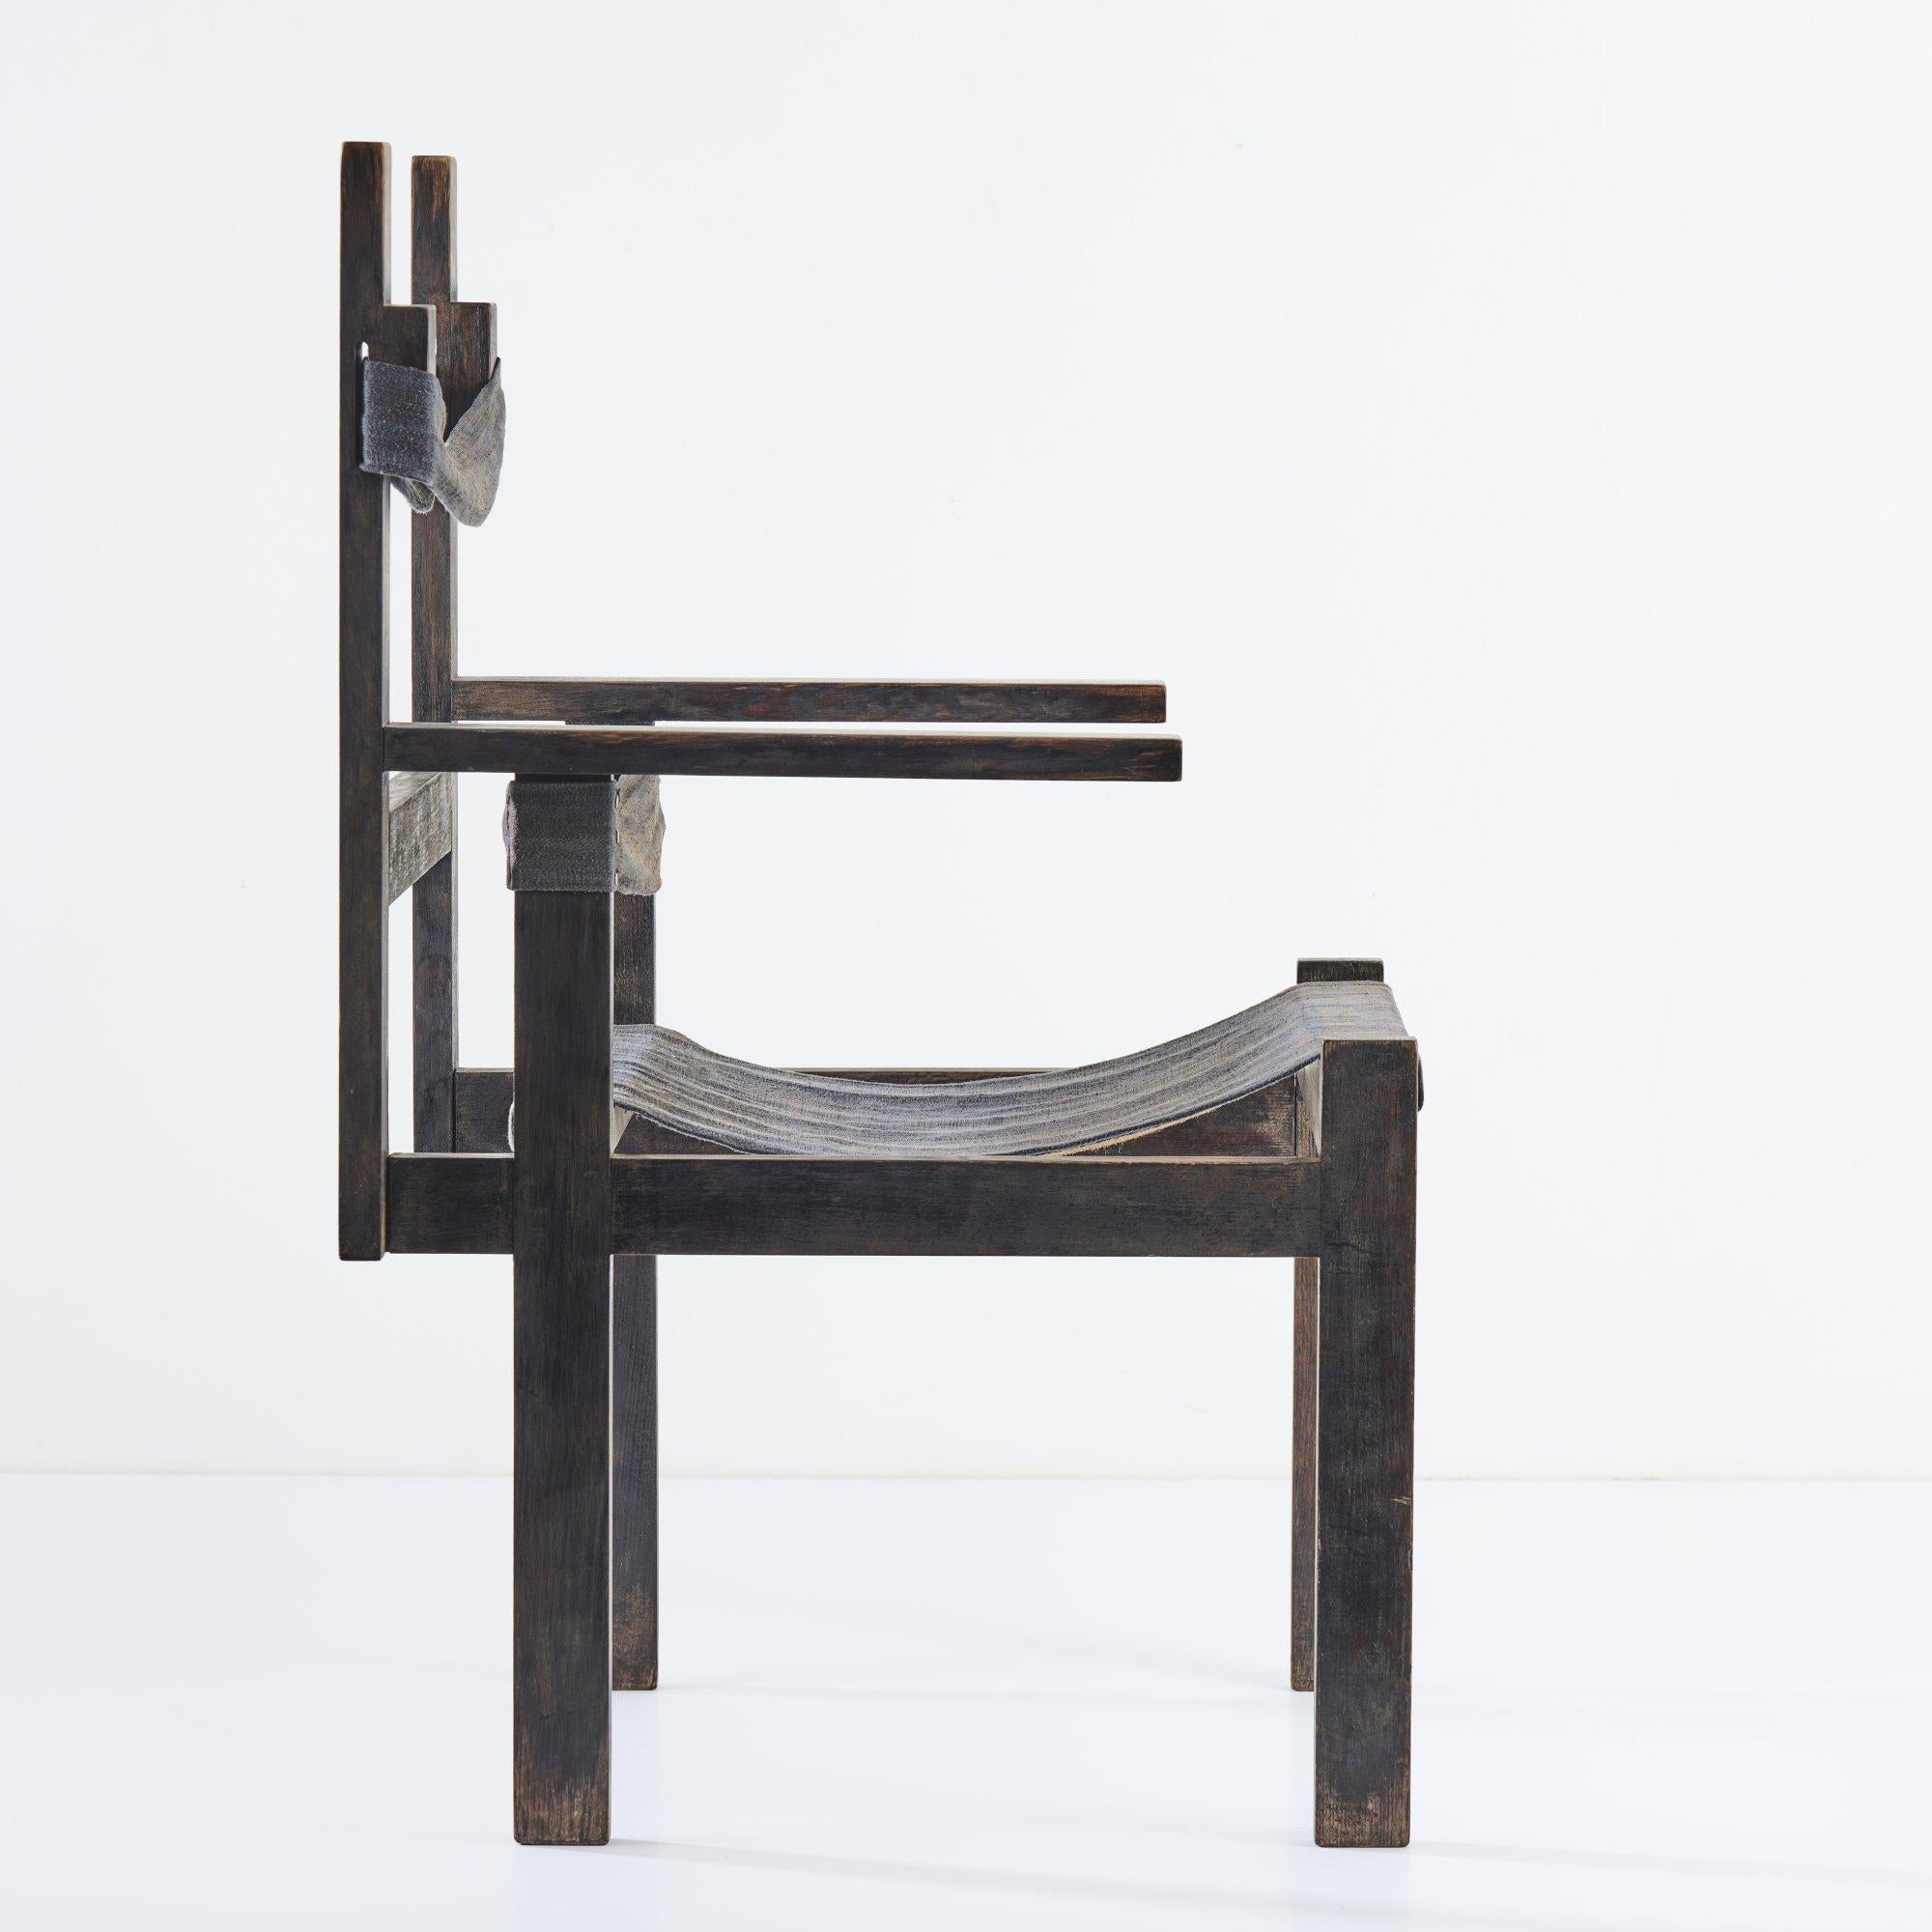 marcel breuer lattice chair ti 1 a and table ti 9